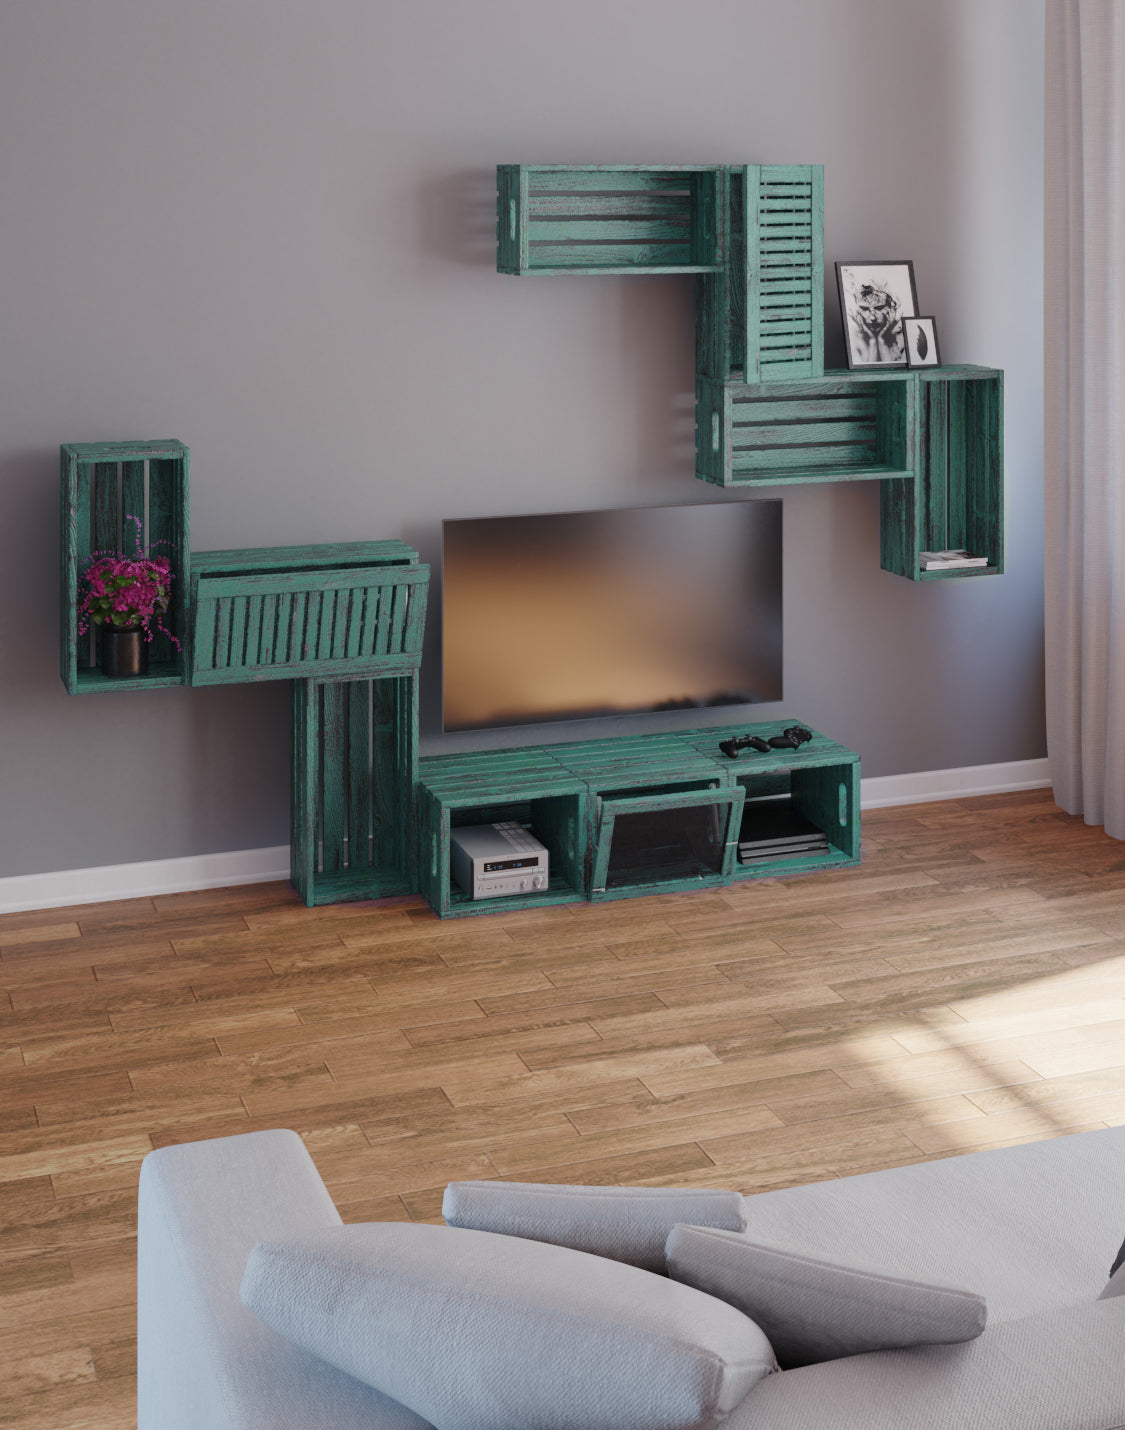 Anita TV Unit Modular And real wood furniture product